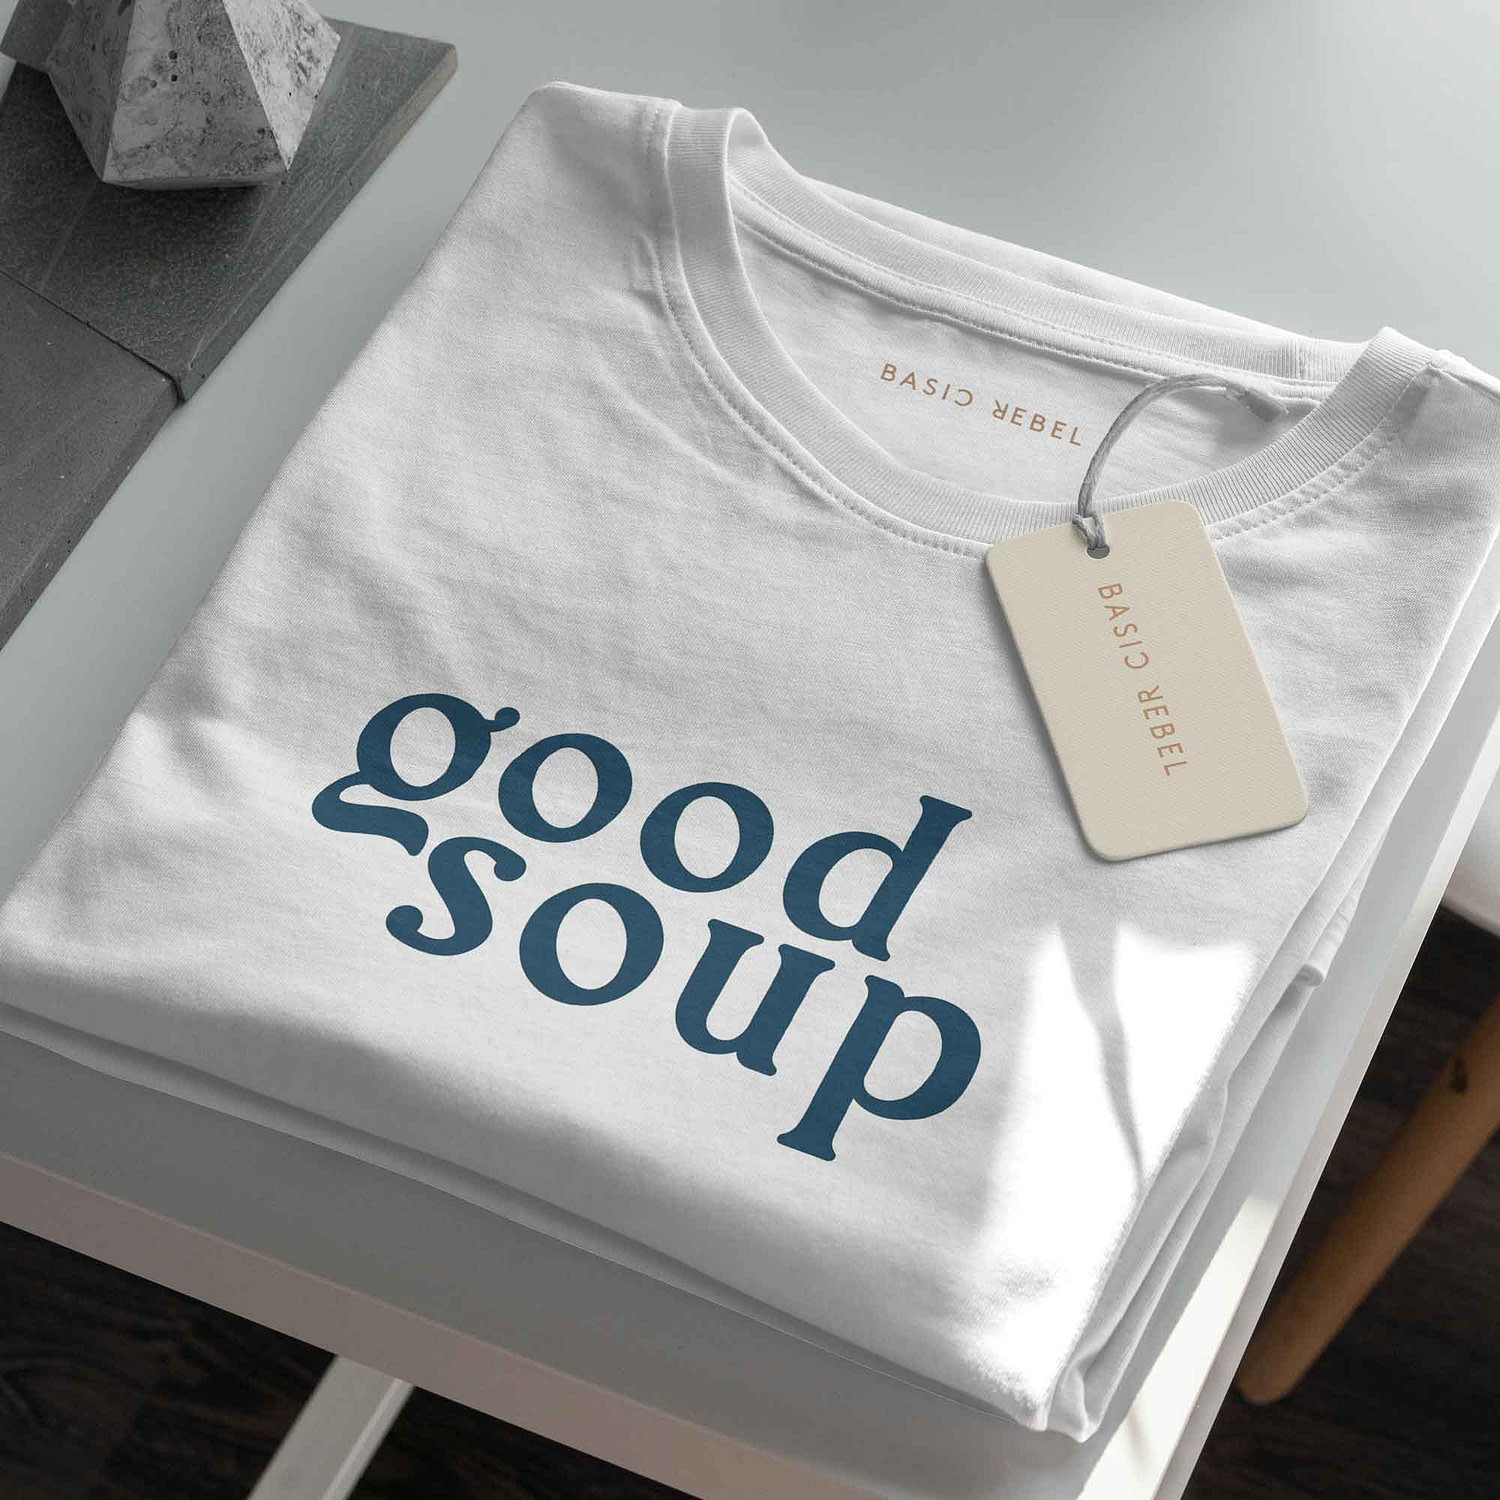 Good Soup / T-Shirt